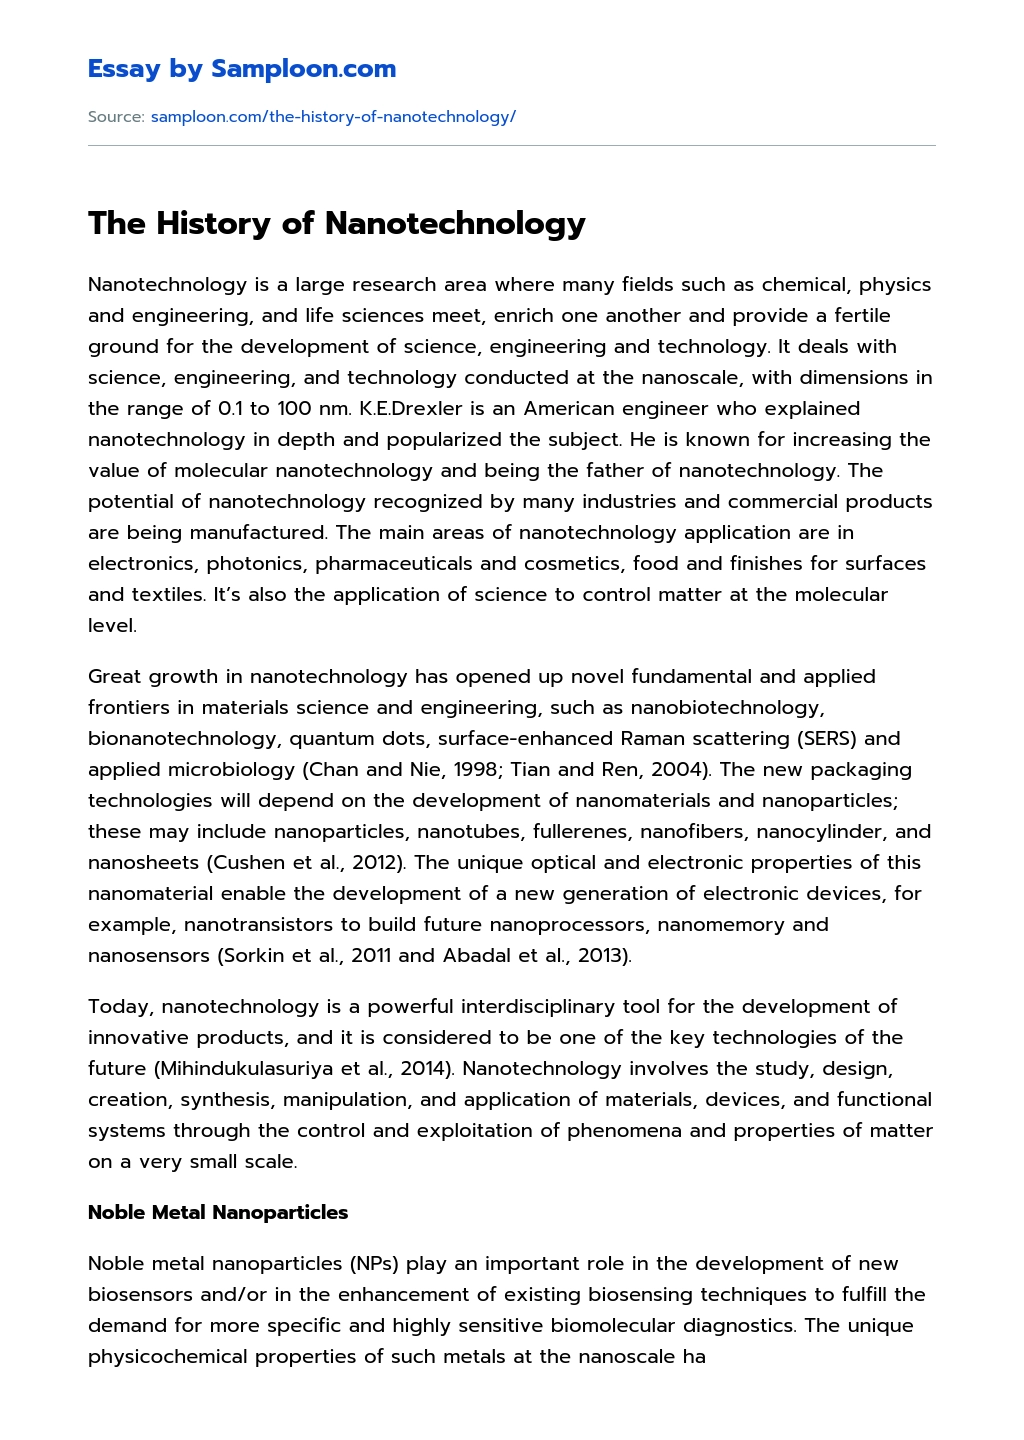 The History of Nanotechnology  essay